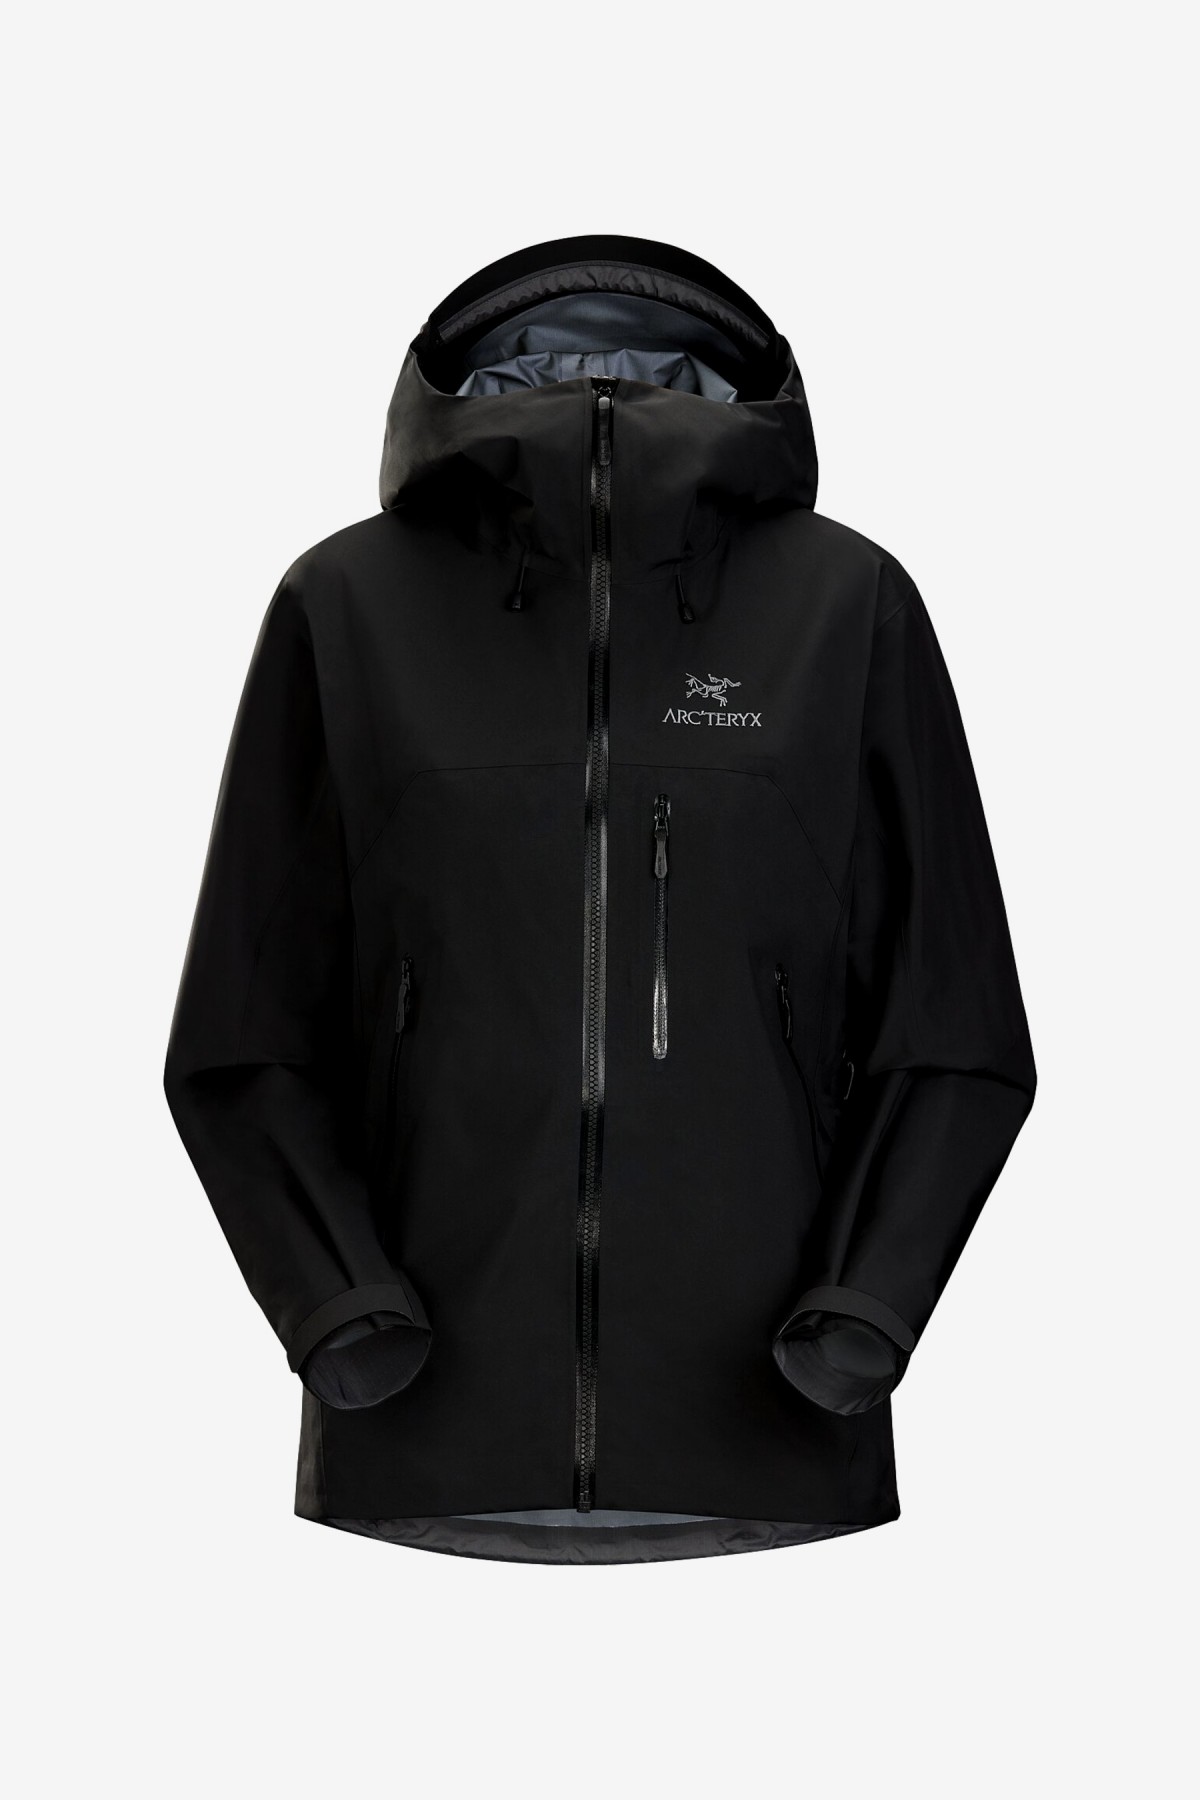 Arc'teryx Beta SV Jacket in Black